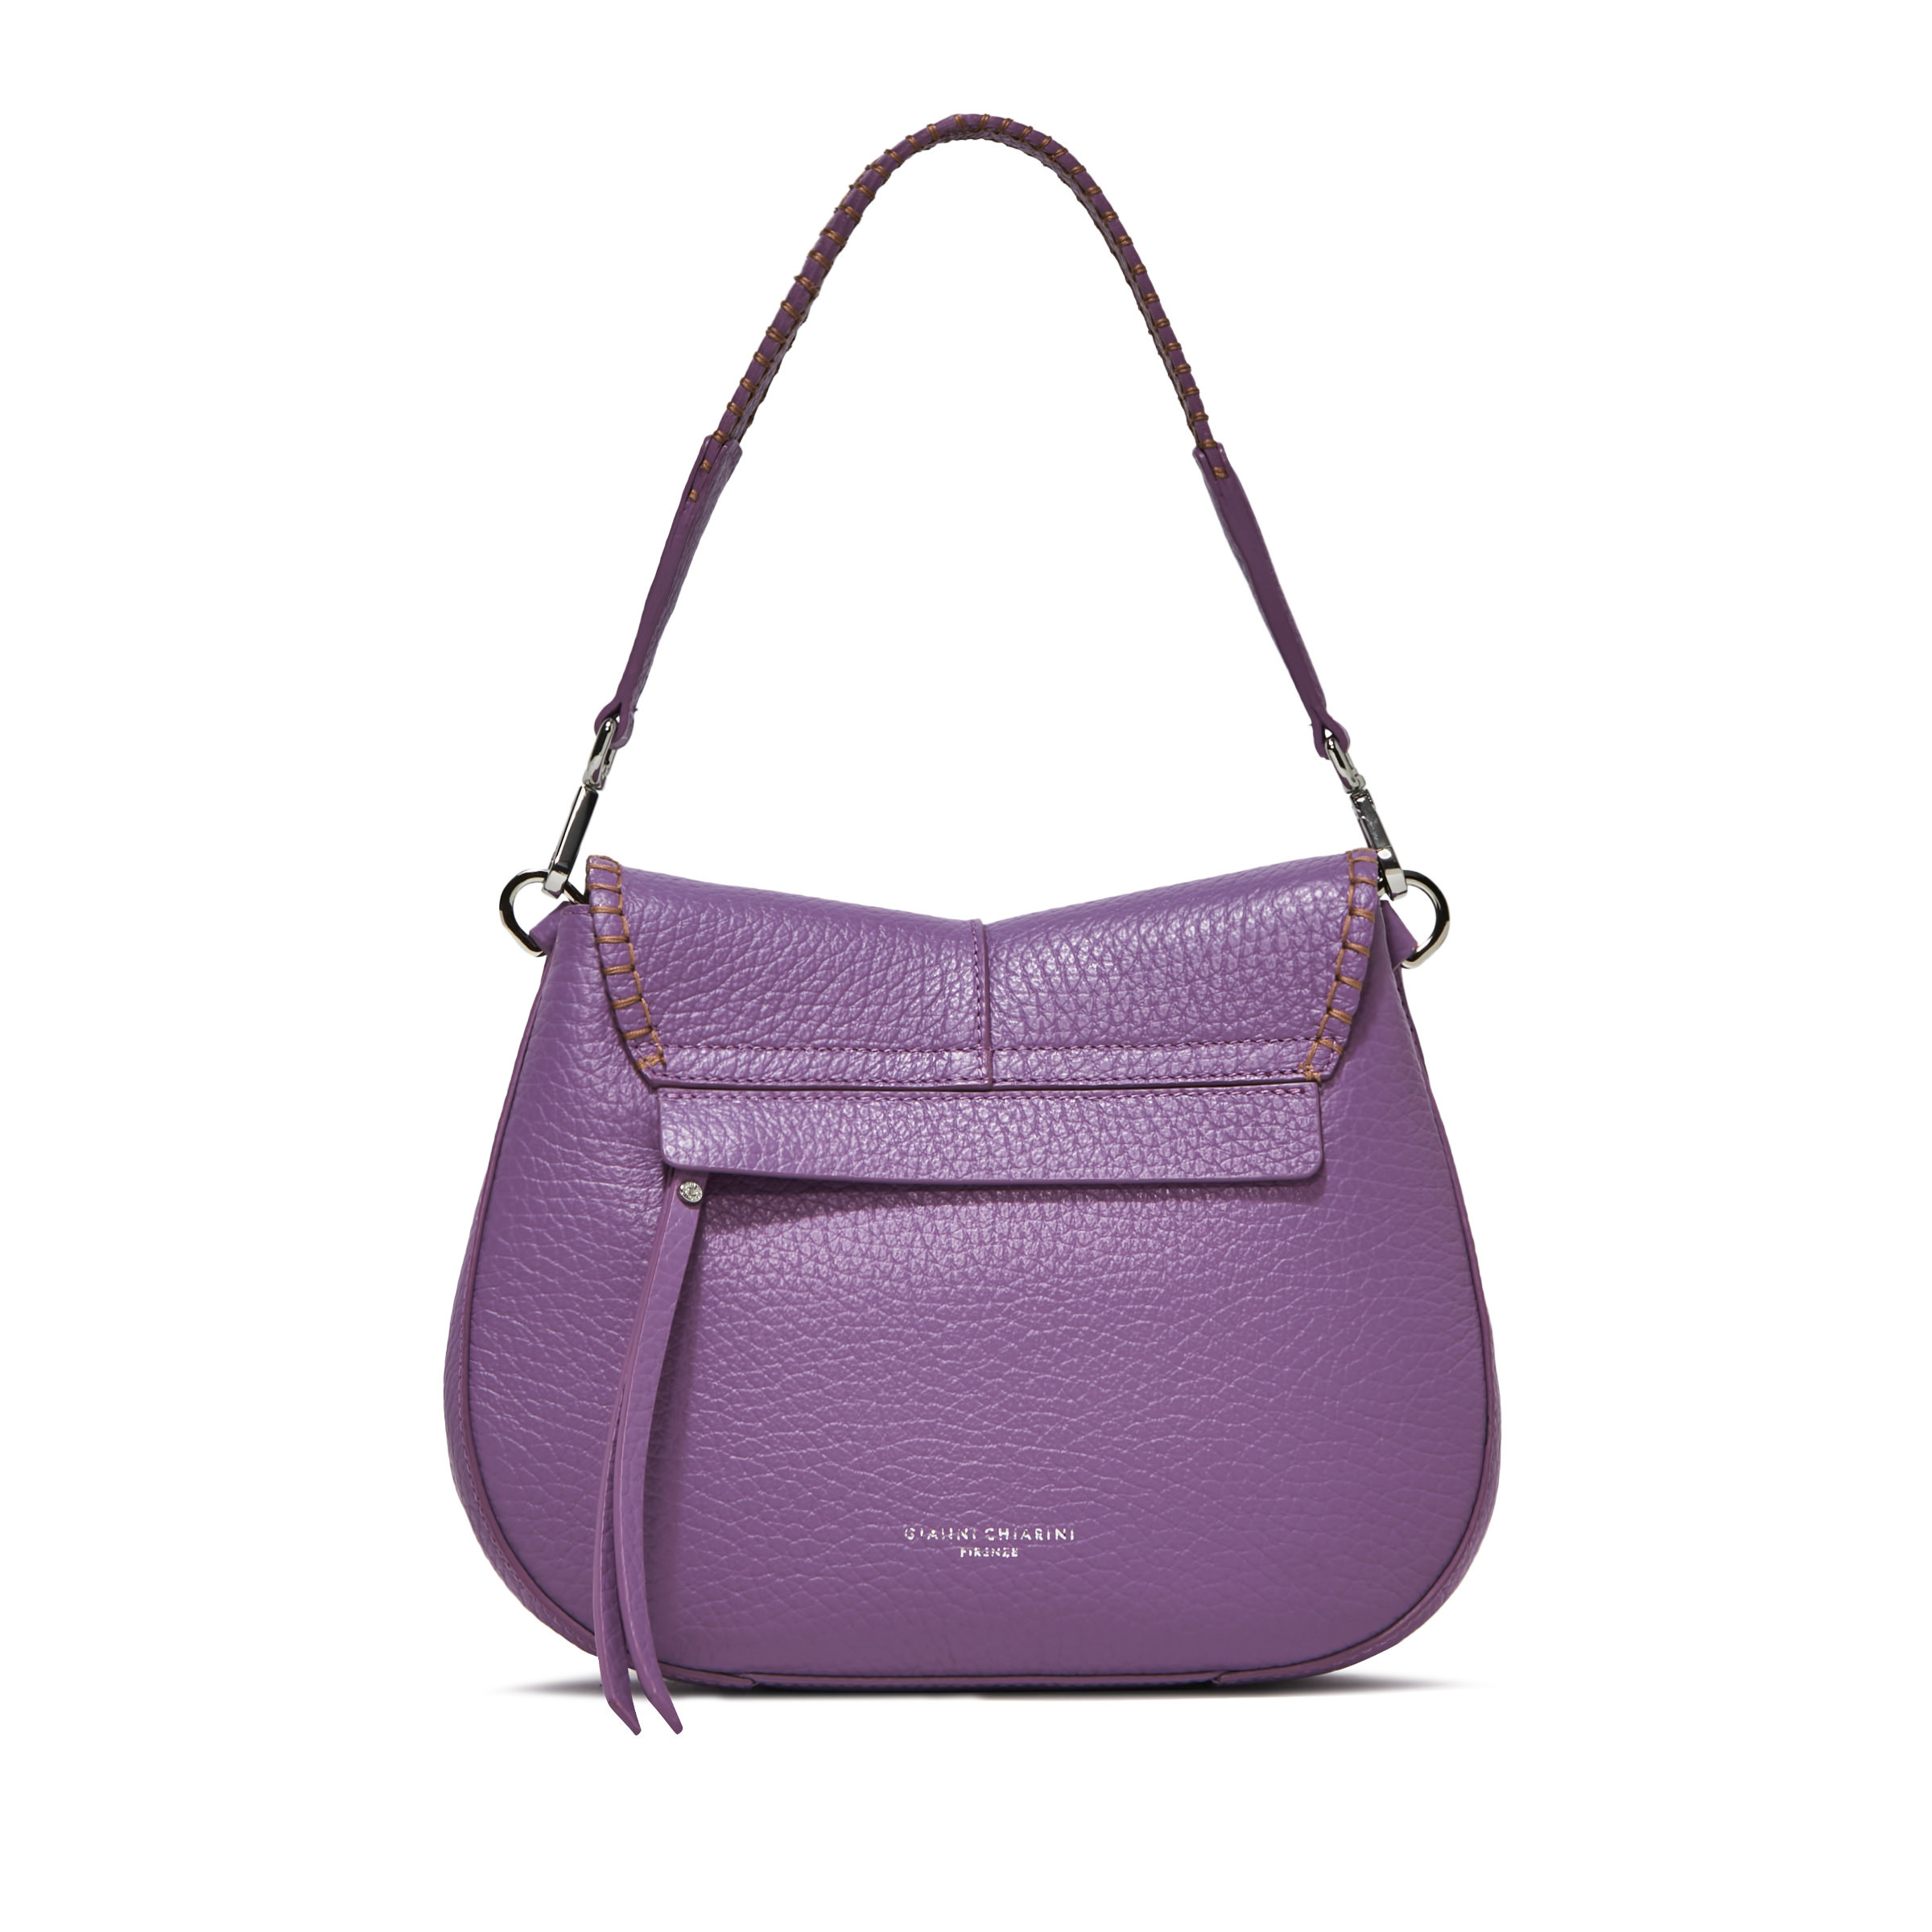 Gianni Chiarini - Helena Round bag in leather, Purple Wisteria, large image number 1